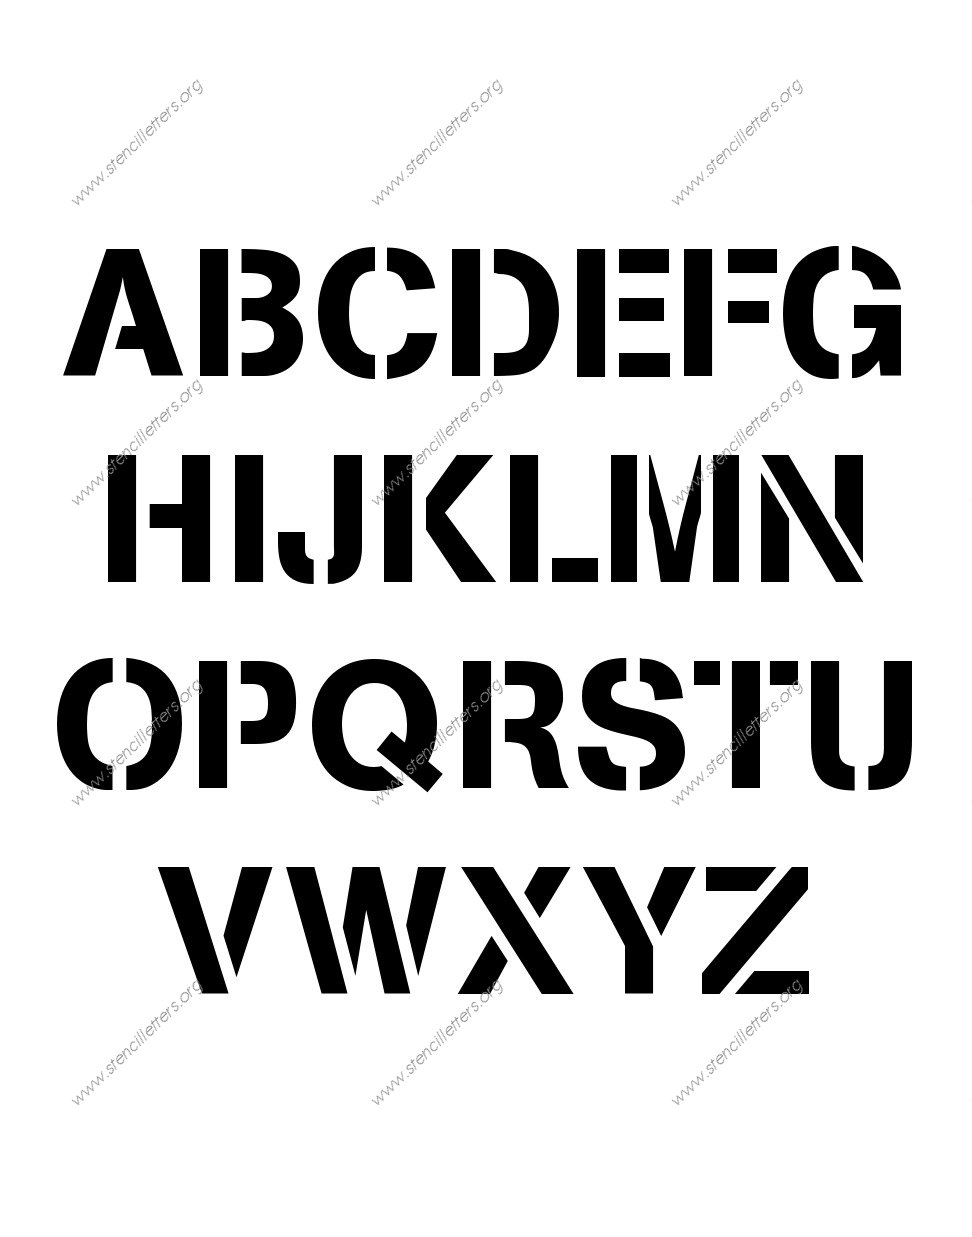 Army Modern A to Z alphabet stencils